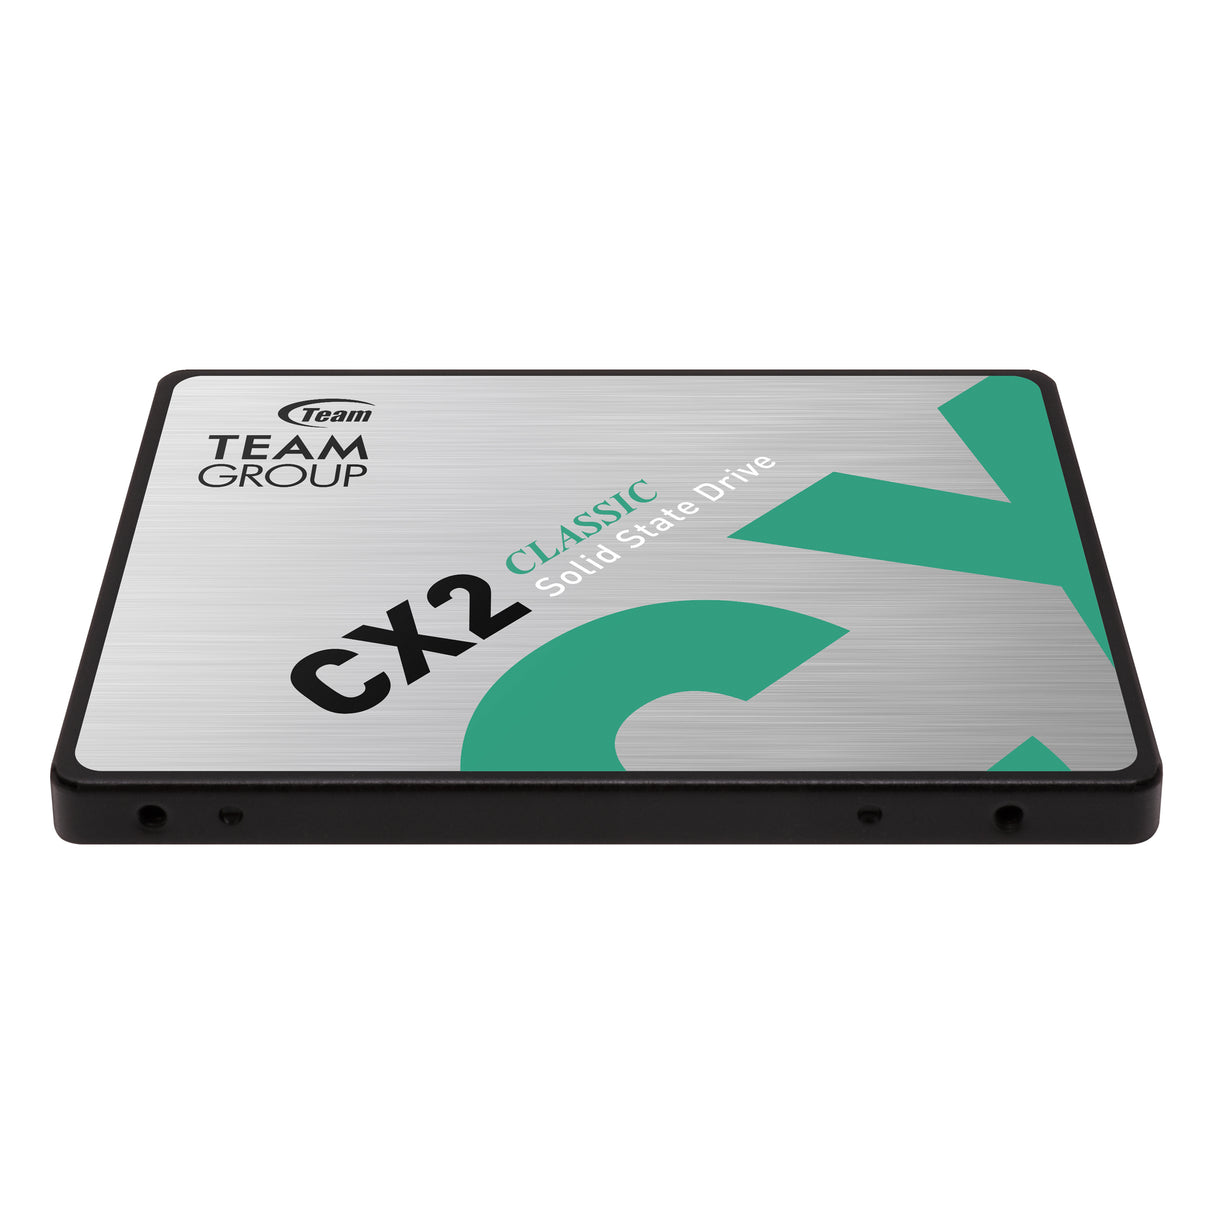 Teamgroup 512GB SSD CX2 3D NAND SATA 3 2,5"